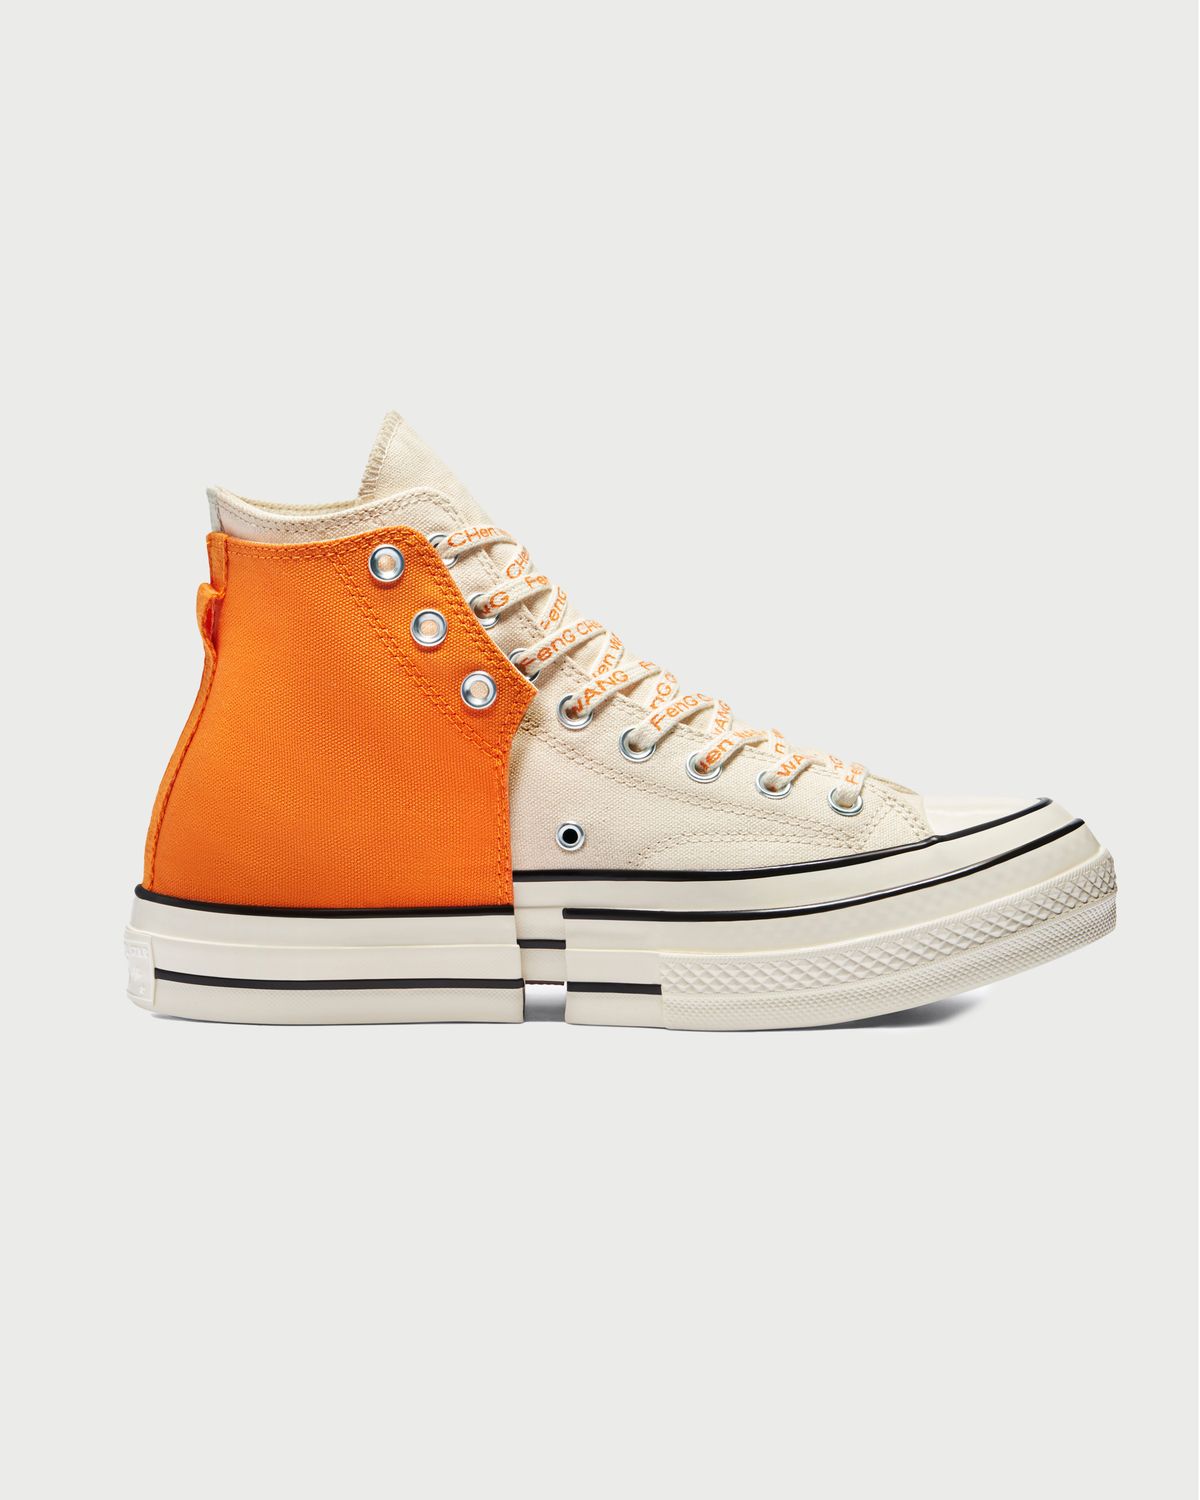 Converse x Feng Chen Wang – 2-in-1 Chuck 70 High Persimmon Orange - Sneakers - Orange - Image 1